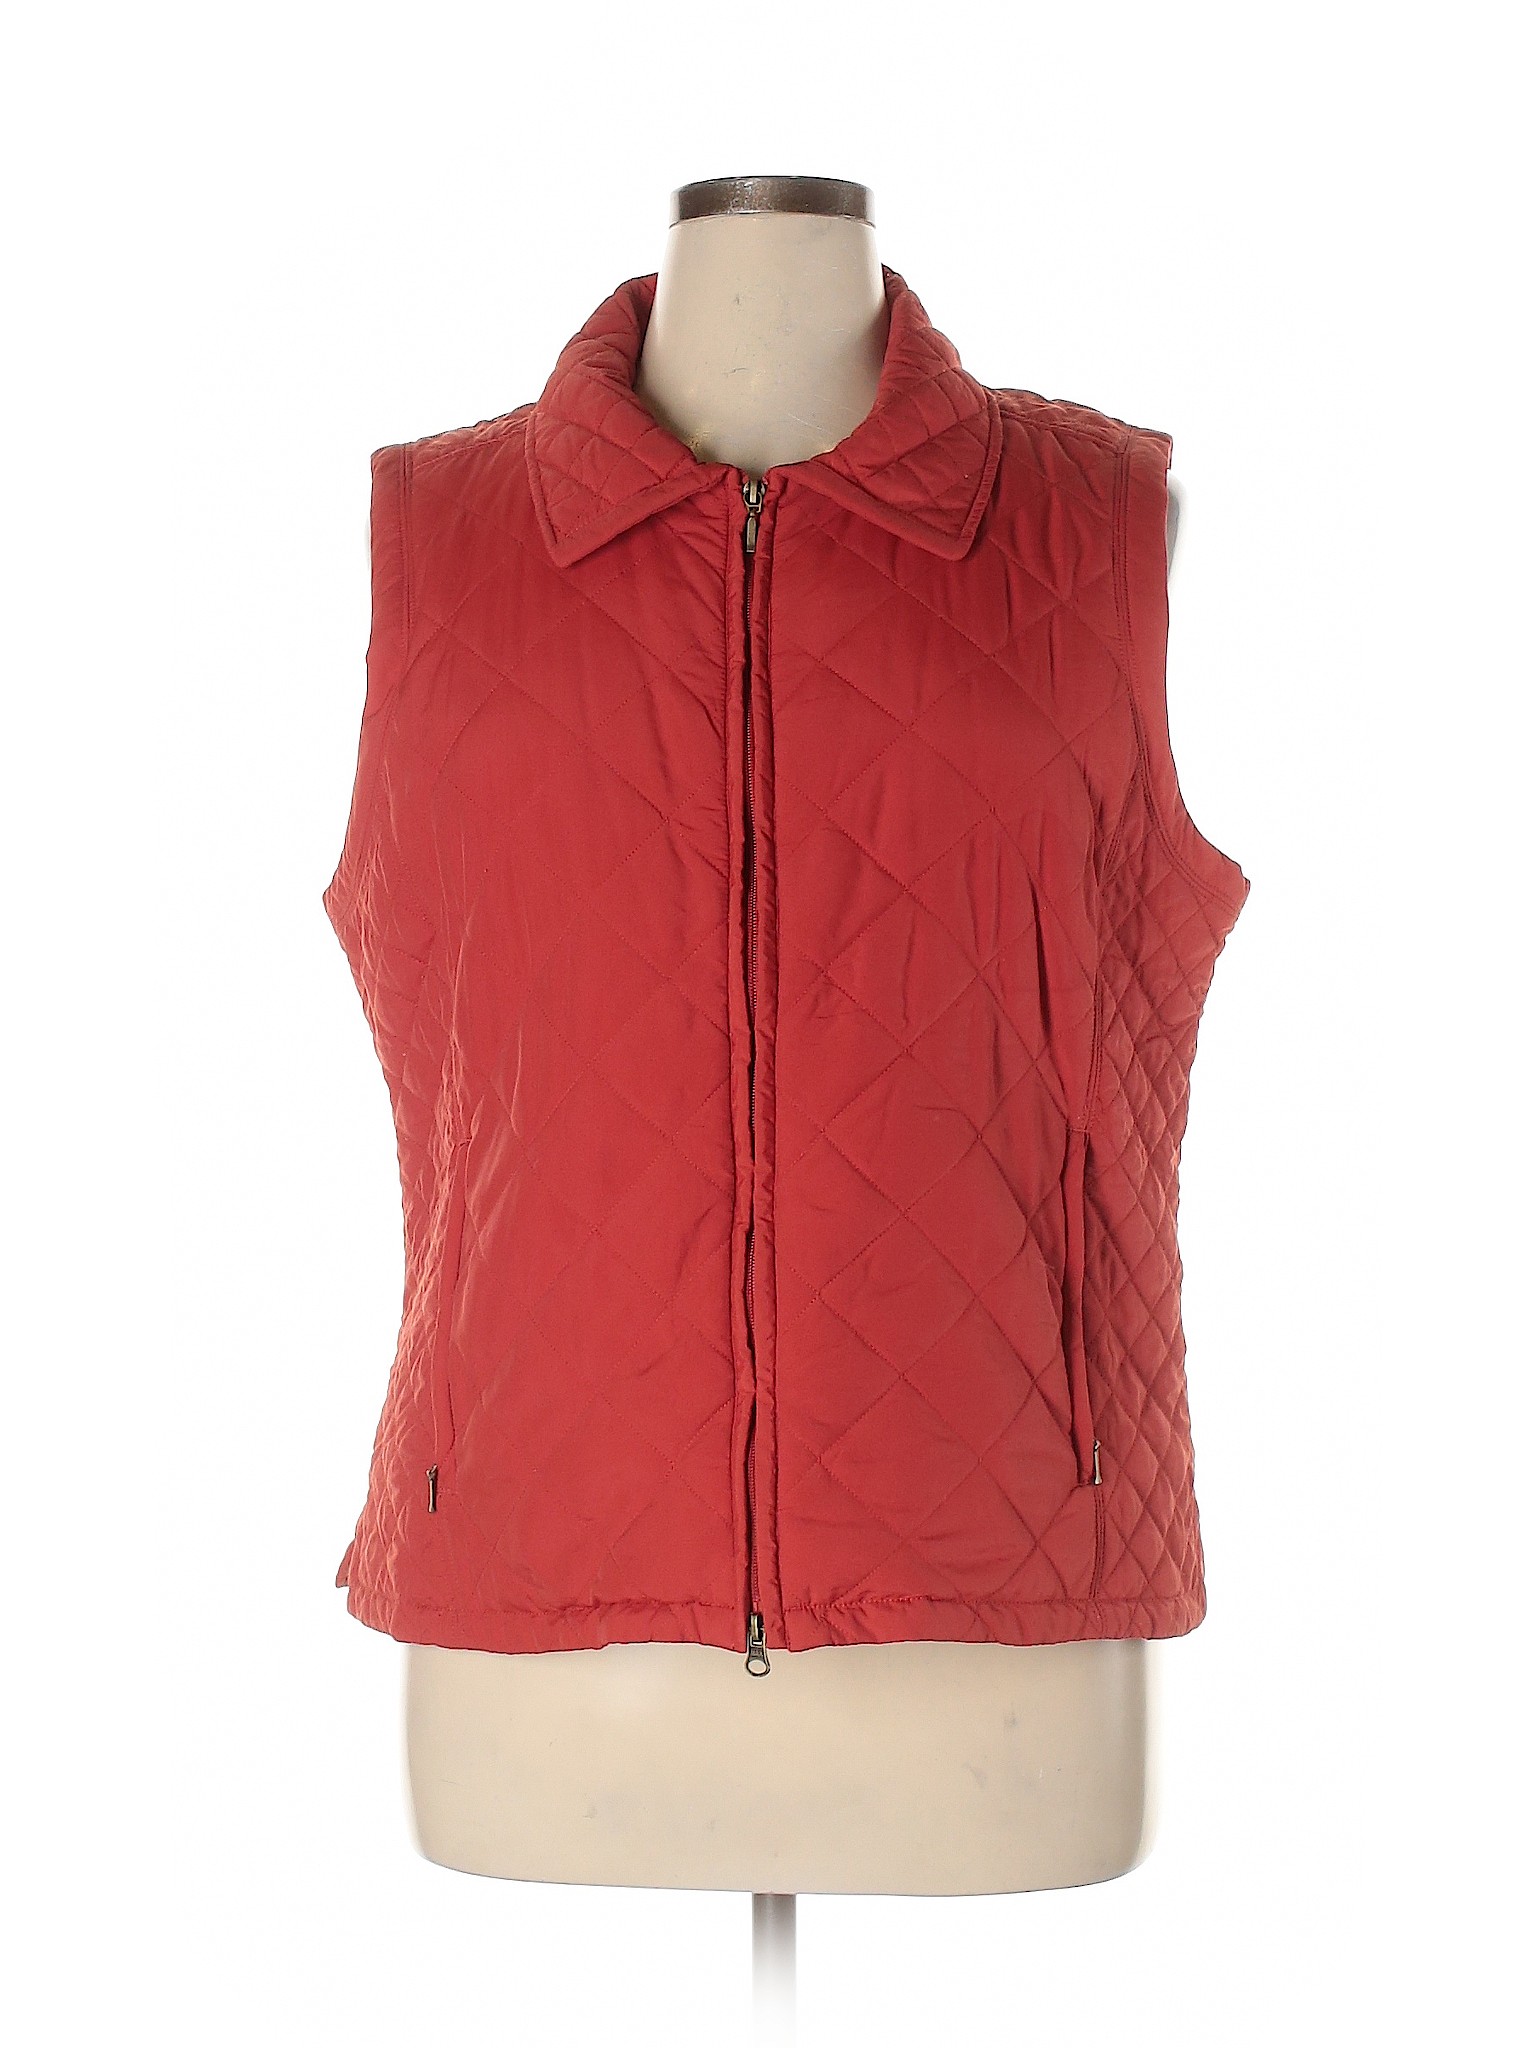 Croft & Barrow Women Red Vest XL | eBay